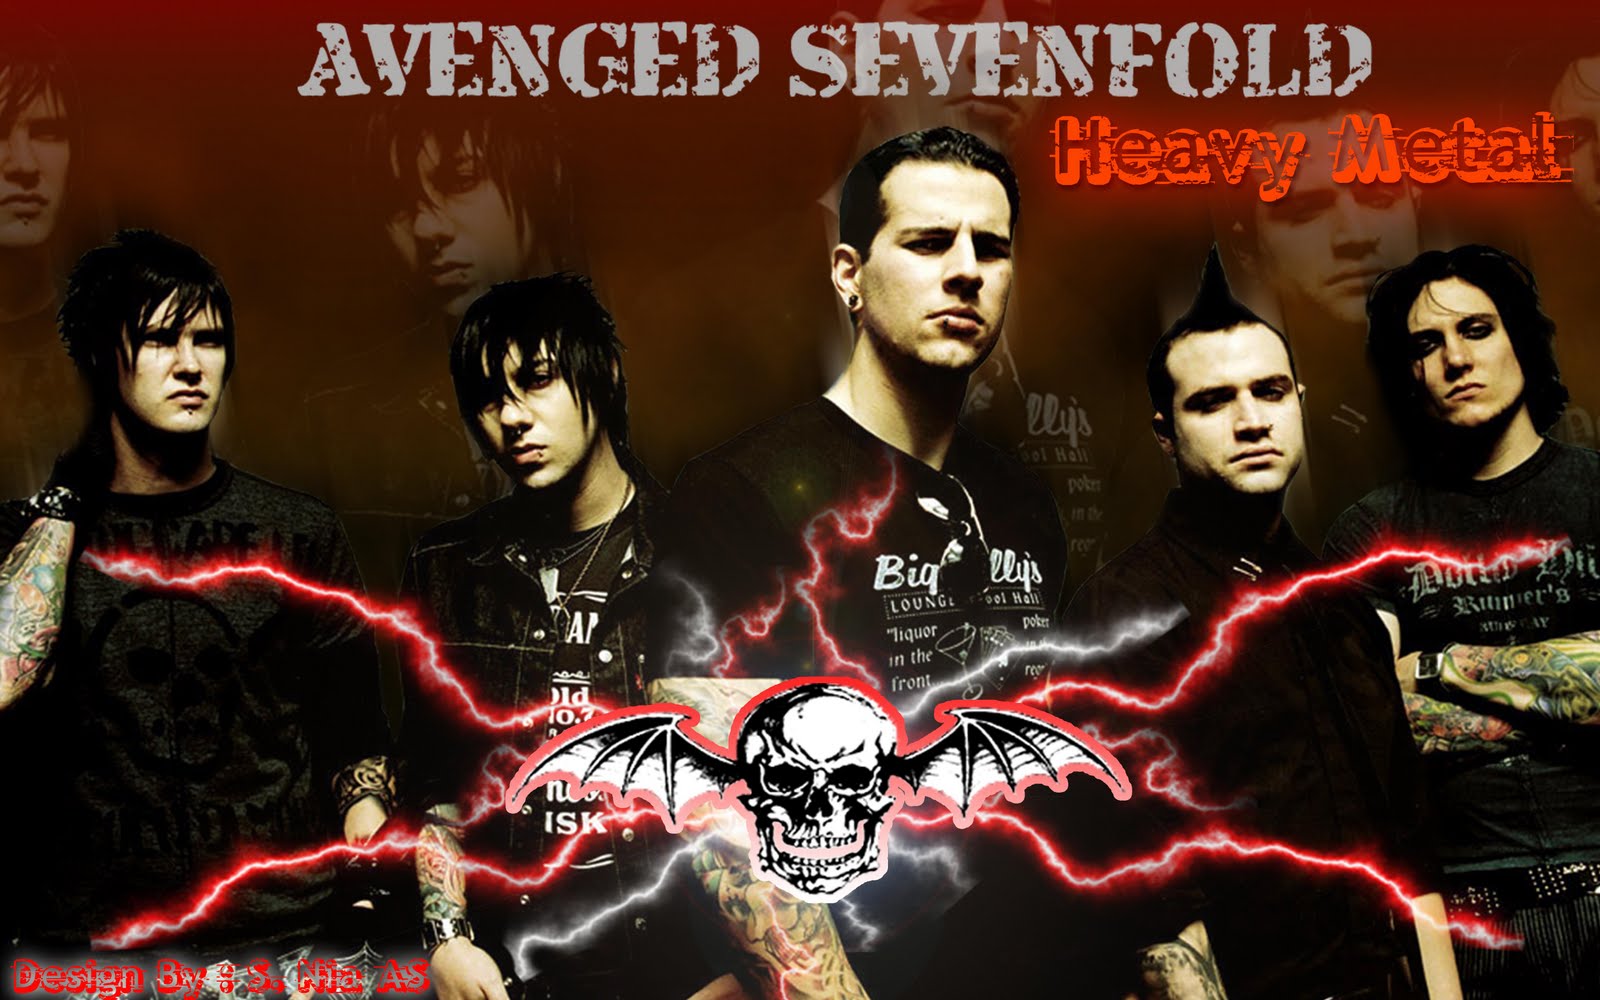 Avenged Sevenfold - YouTube